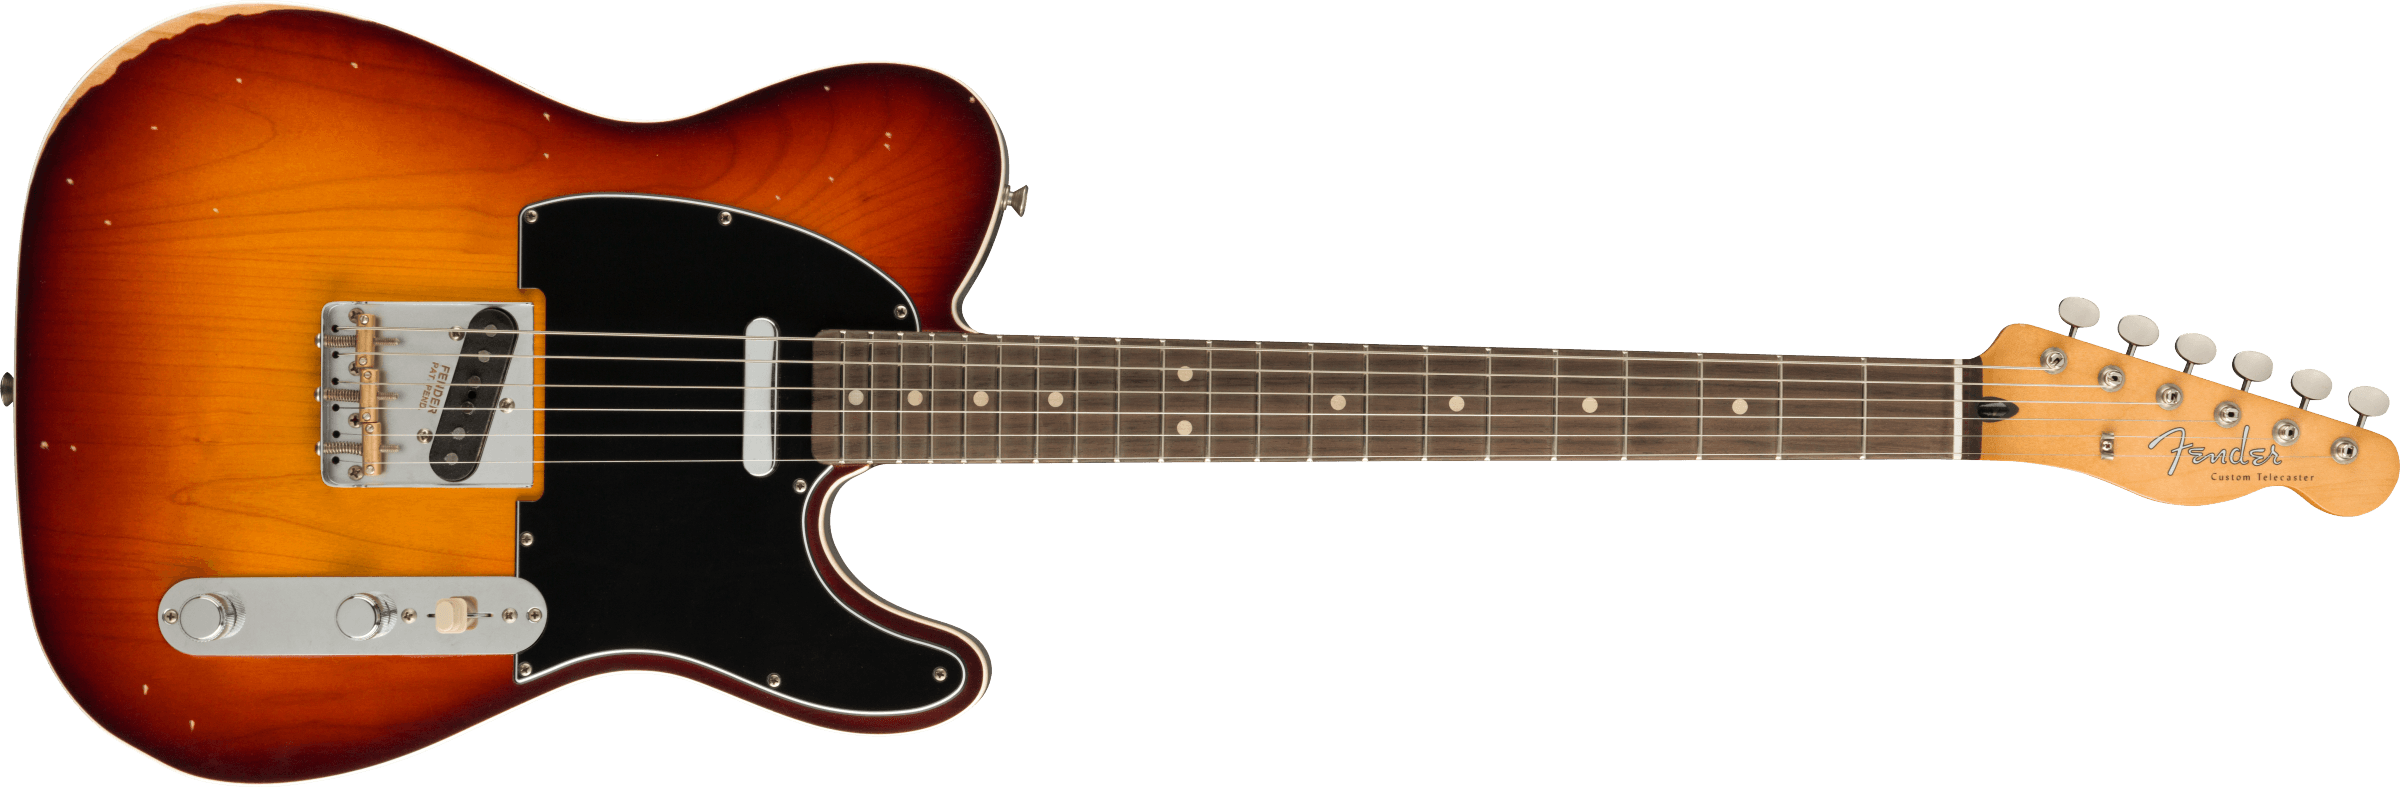 Fender Jason Isbell Custom Telecaster Rosewood 3-color Chocolate